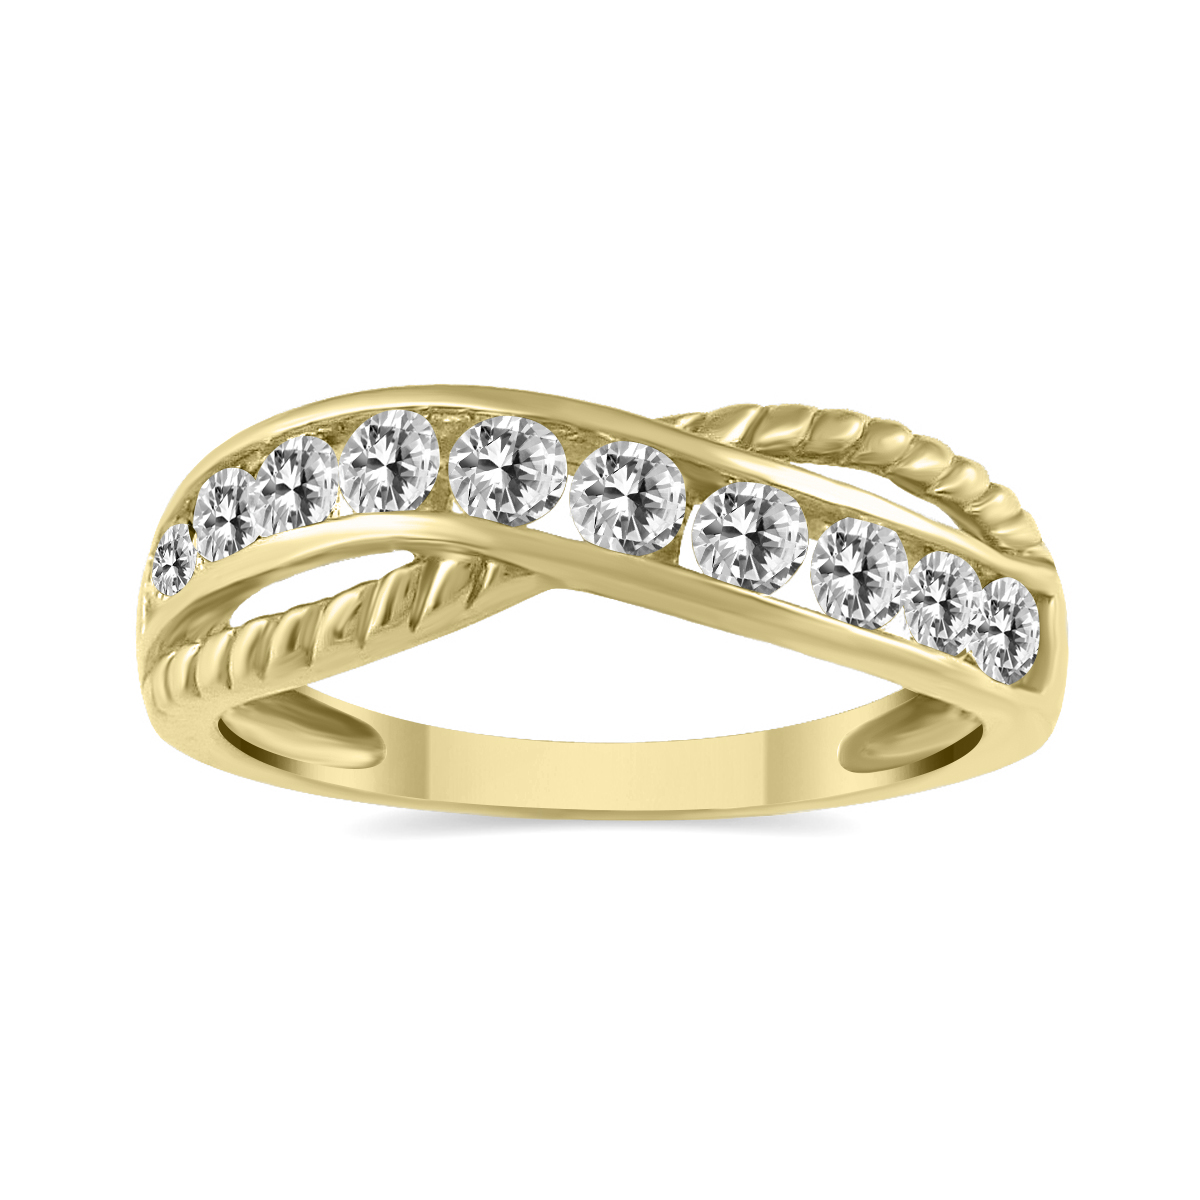 1/2 Carat TW 10 Stone Diamond Ring in 14K Yellow Gold